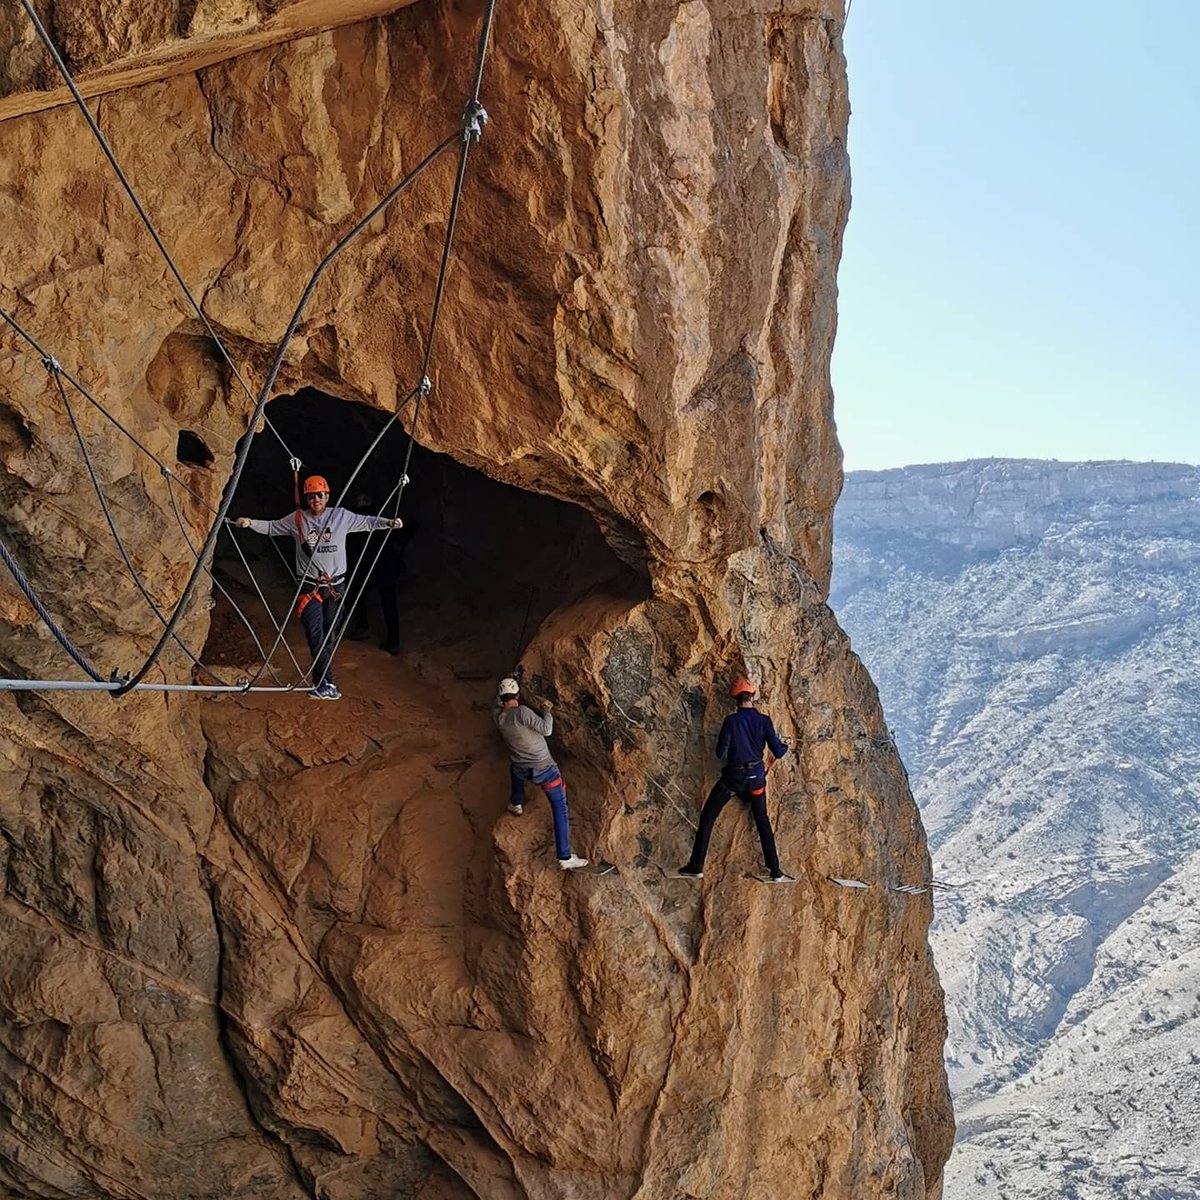 من أجمل ما يُقال ؛ ' ستبقى بين ادعيتيّ '
.
Join us for exploring Oman 🇴🇲
VF cave 
#omanphotography #oman #hiking# #compingtrip
#adventure #travelguide #trekking#  #hikingadventures #francetourisme  #alilajabalakhdar #discovery #beautiful#fun #beautifulhotels